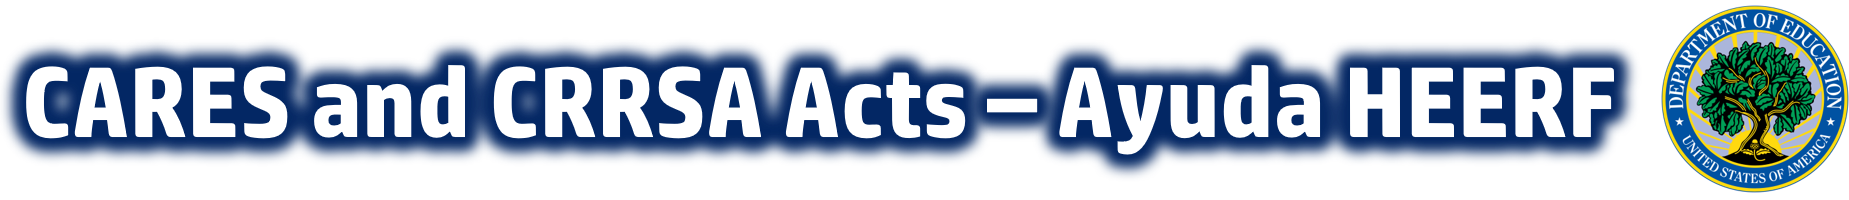 Imagen Banner de CARES and CRRSA Acts